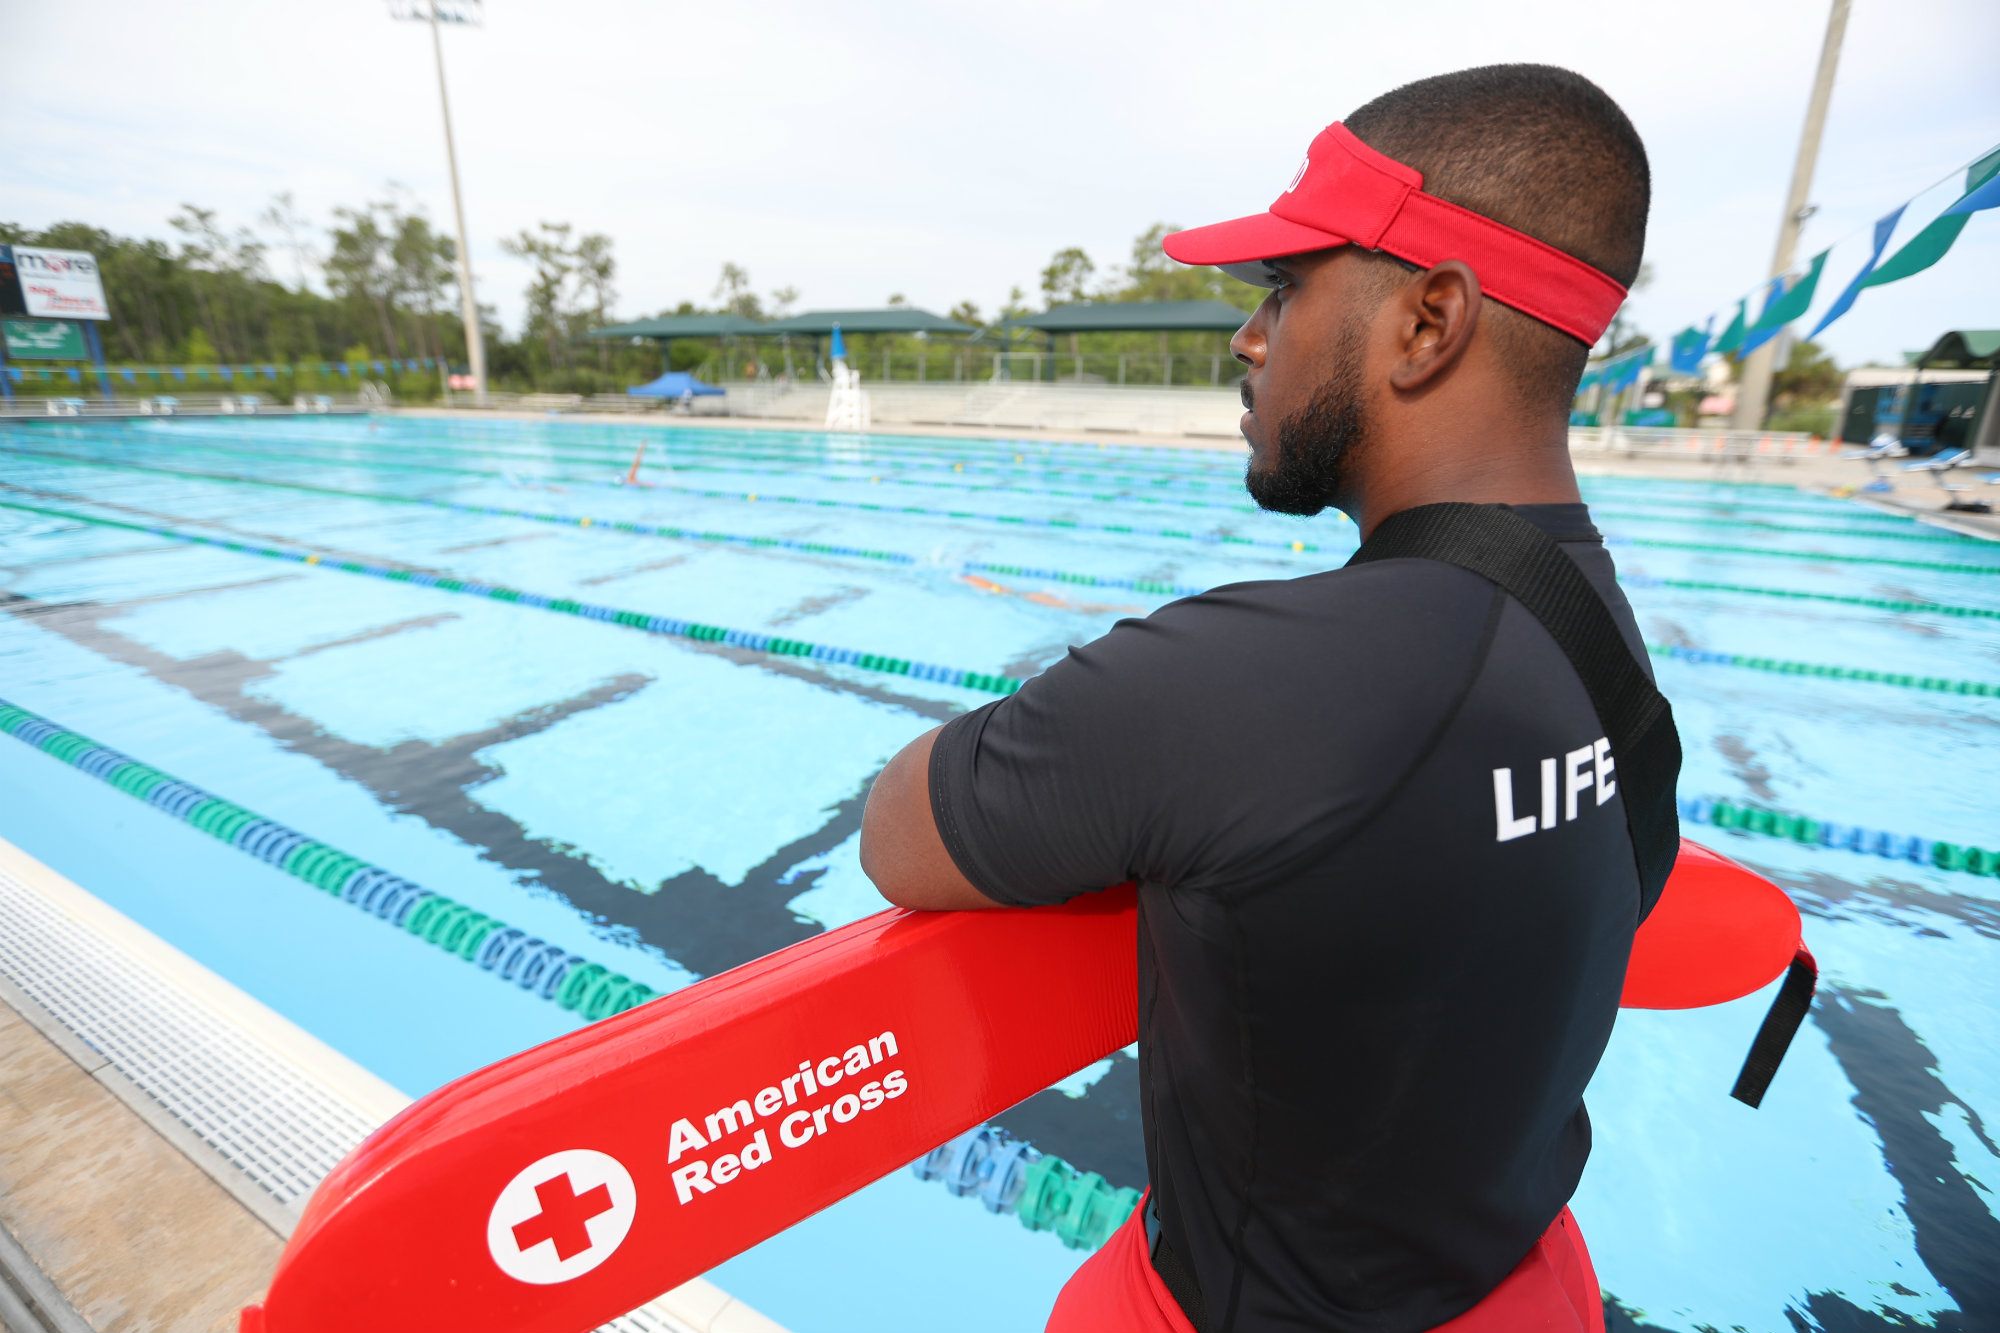 American Red Cross Lifeguarding Program